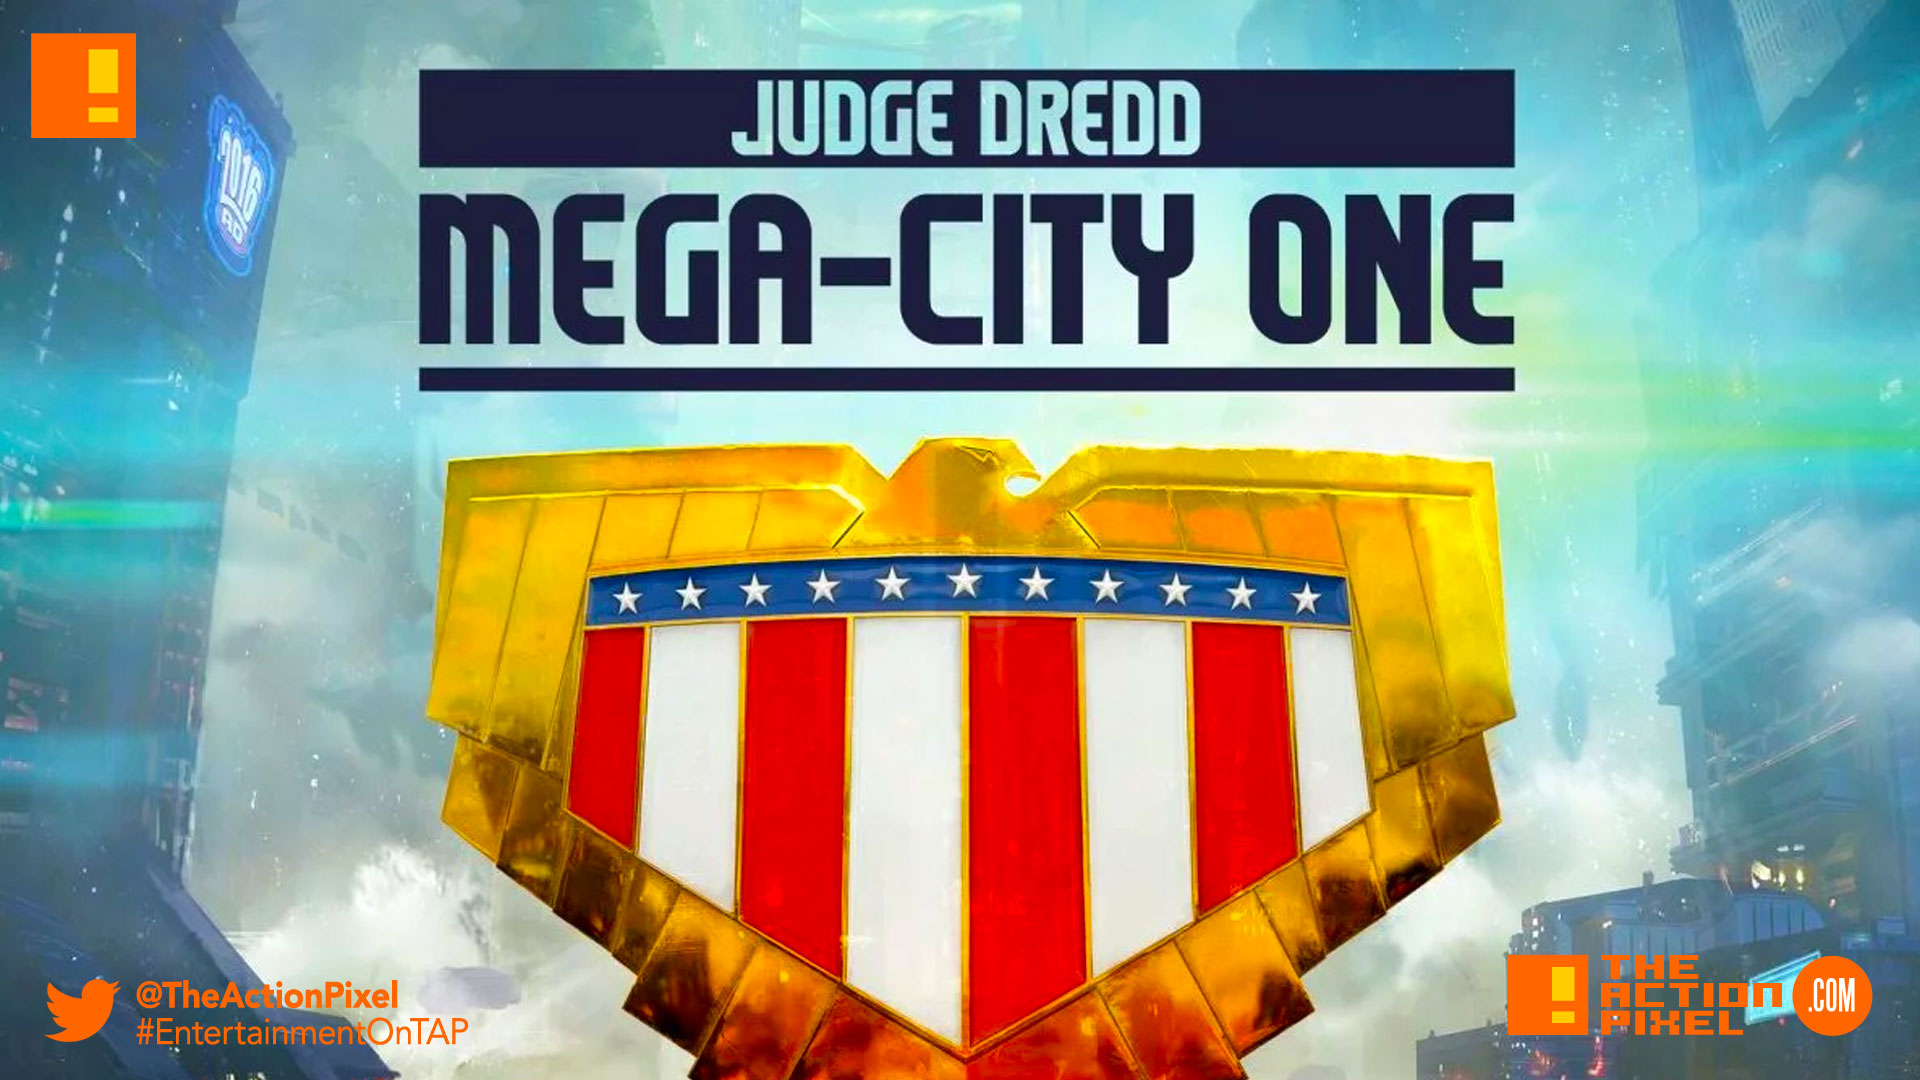 mega city one, Judge dredd, judge dredd: mega city one, rebellion, 2000 AD, entertainment on tap, the action pixel, IM Global,rebellion, concept art